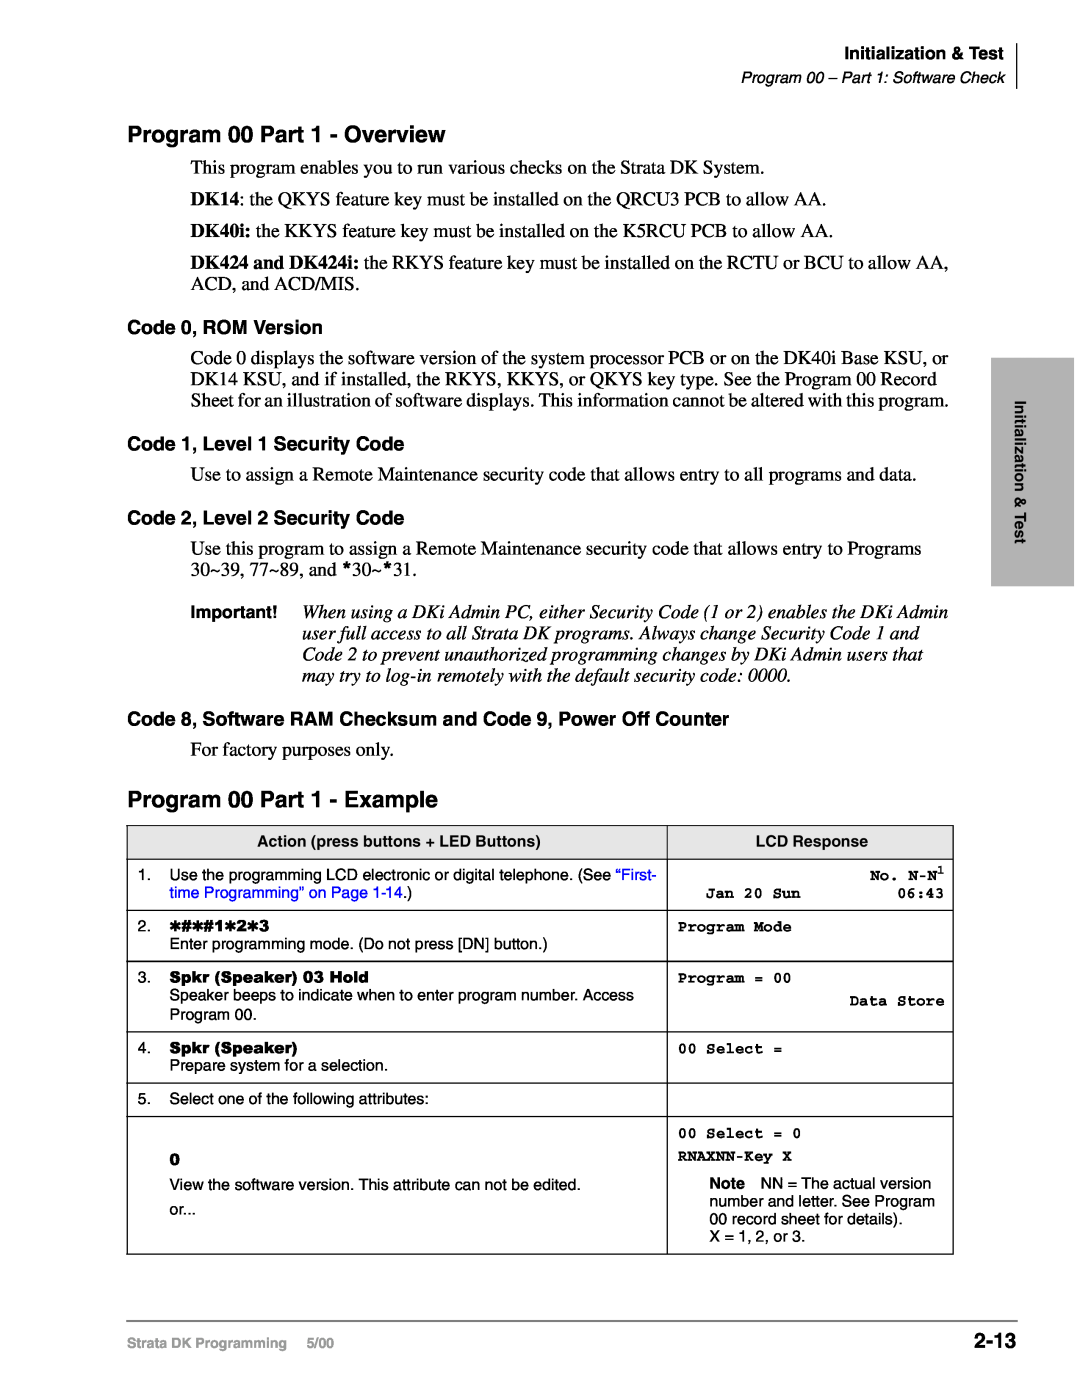 Toshiba dk14, DK40I, DK424I manual Program 00 Part 1 - Overview, Program 00 Part 1 - Example, 2-13, Code 0, ROM Version 